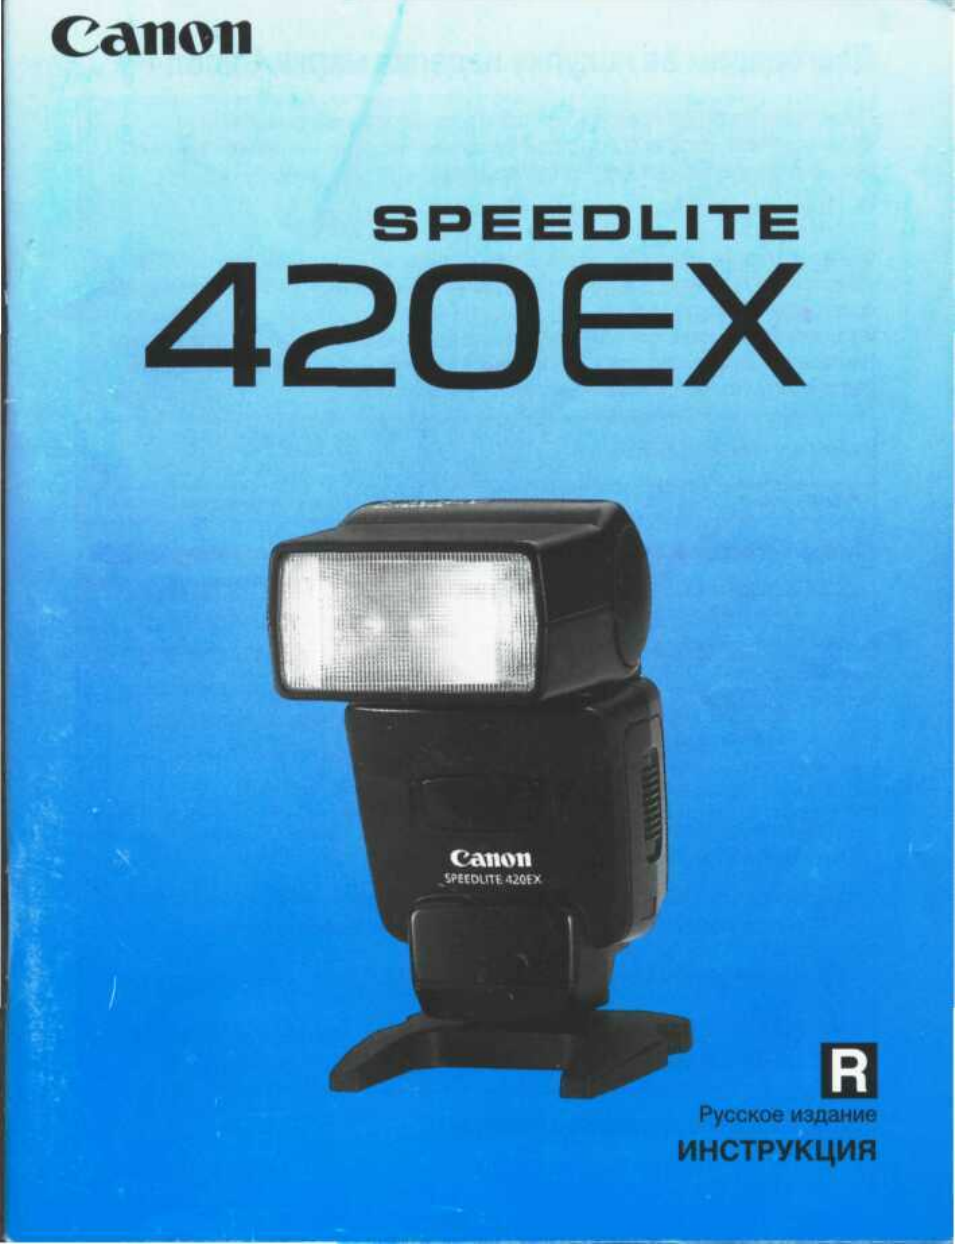 Инструкция по эксплуатации Canon Speedlite 420EX | 29 страниц